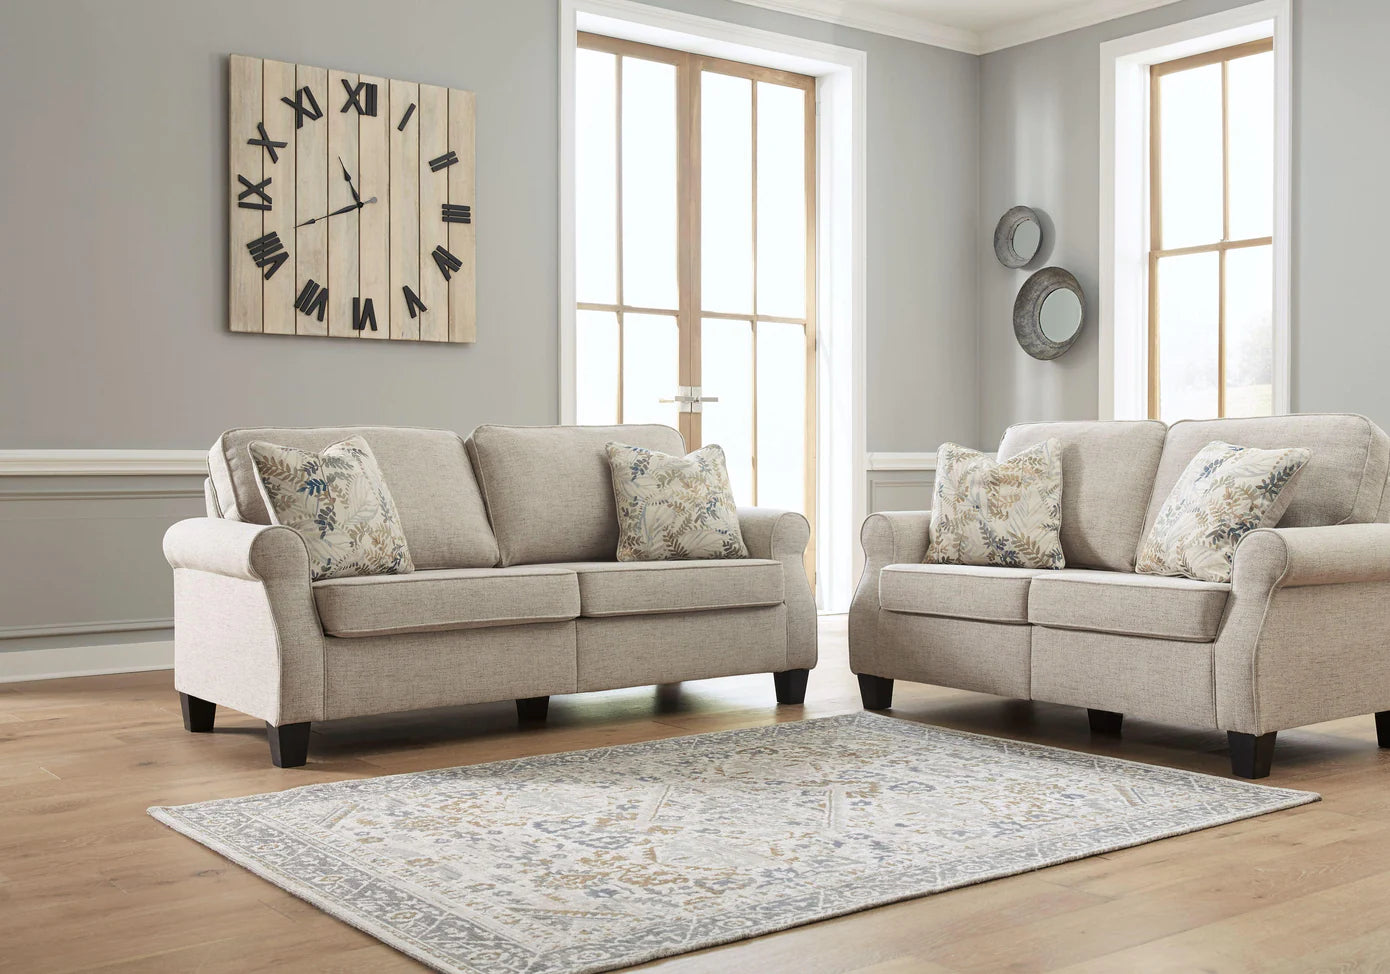 Scandinavian Furniture - Embracing Simplicity and Serenity